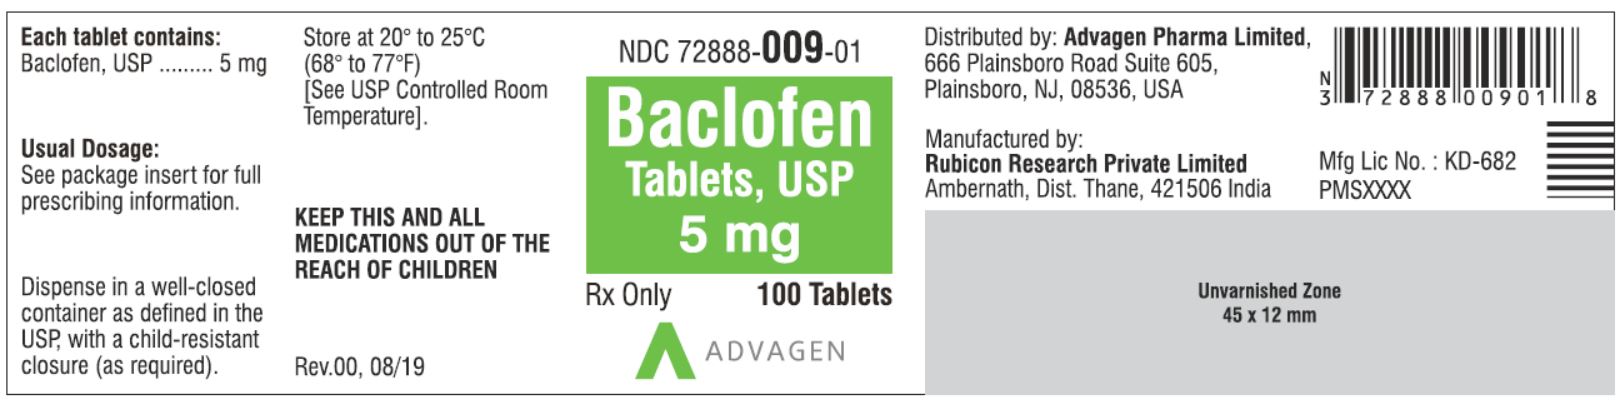 NDC: <a href=/NDC/72888-009-01>72888-009-01</a> - Baclofen Tablets, USP 5 mg - 100 Tablets